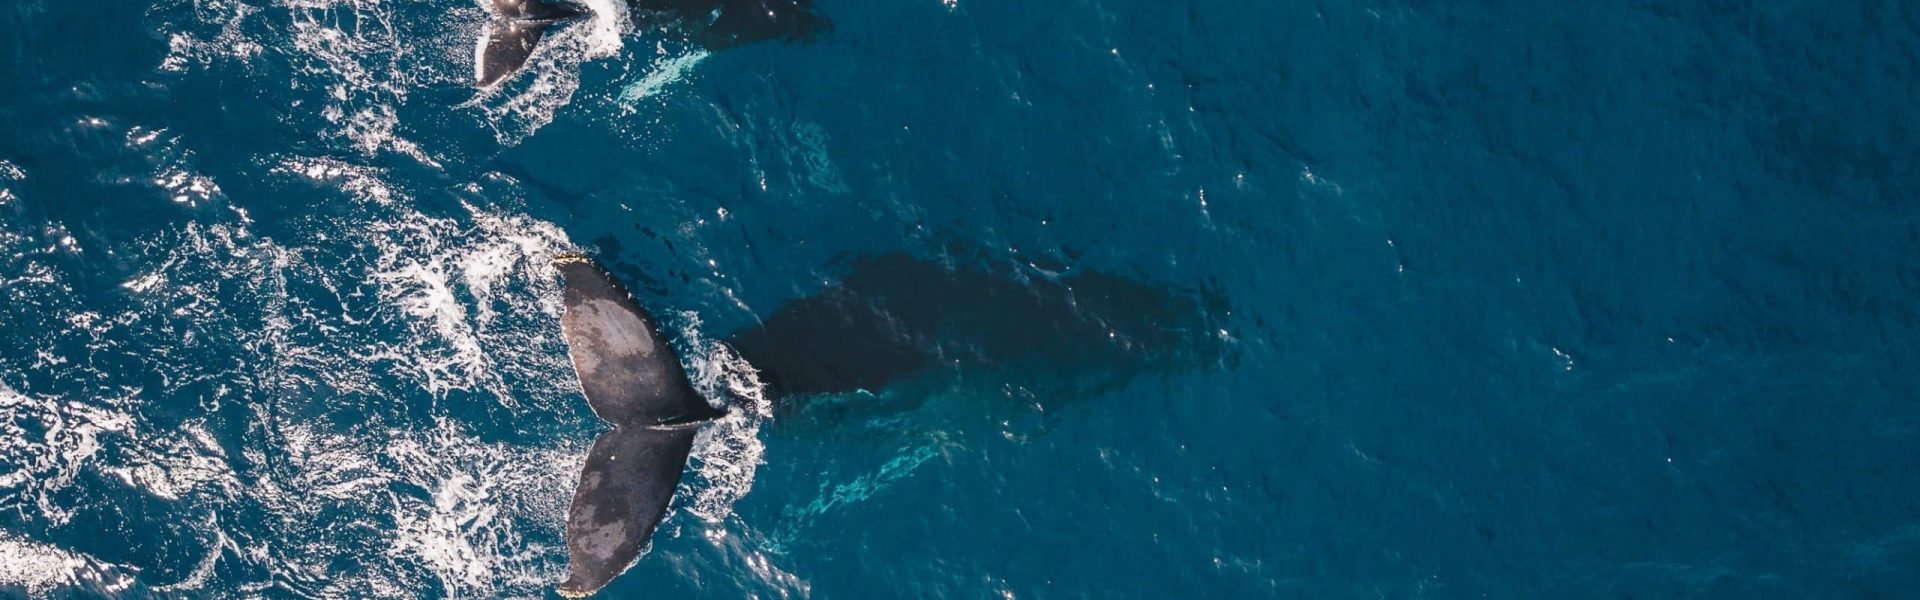 Wale: Sp Megaptera novaeangliae